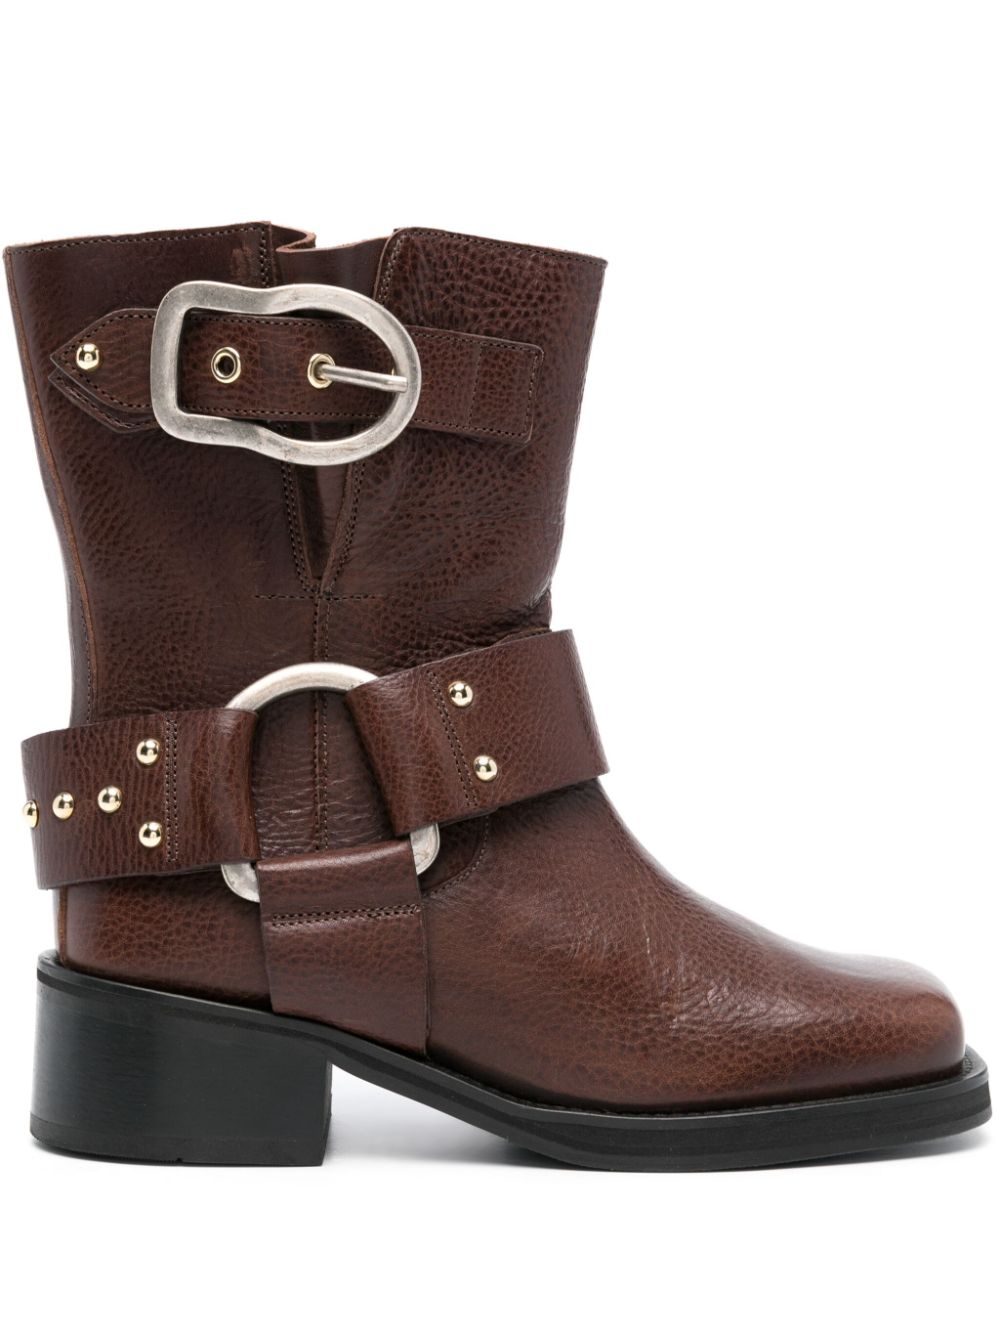 Dorothee Schumacher stud-embellished leather boots - Brown